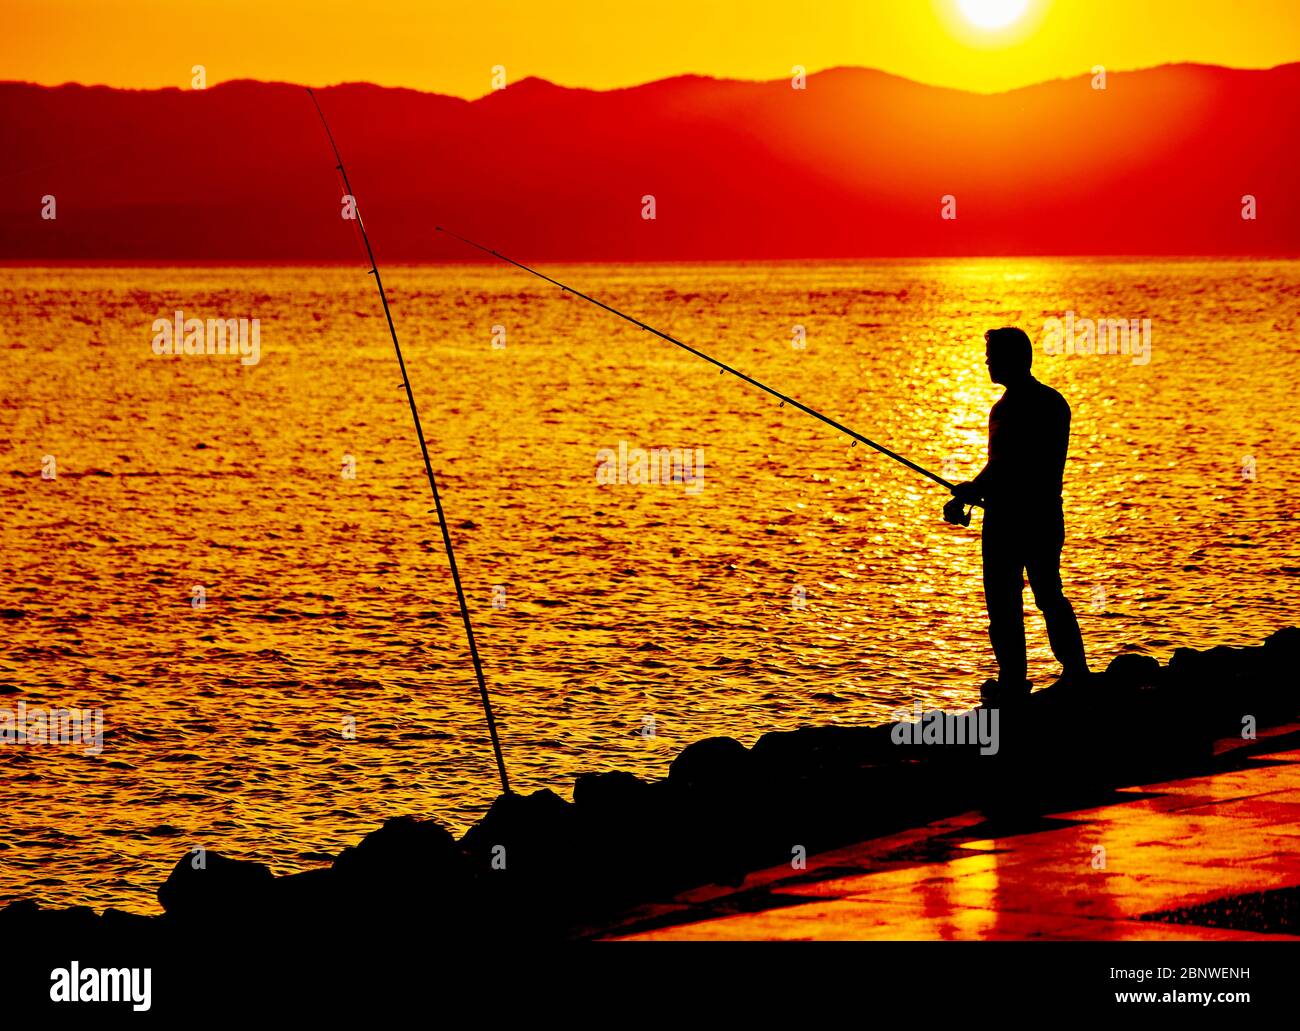 Man Fishing on Beach at Sunrise Editorial Photo - Image of adventure, mile:  194547321